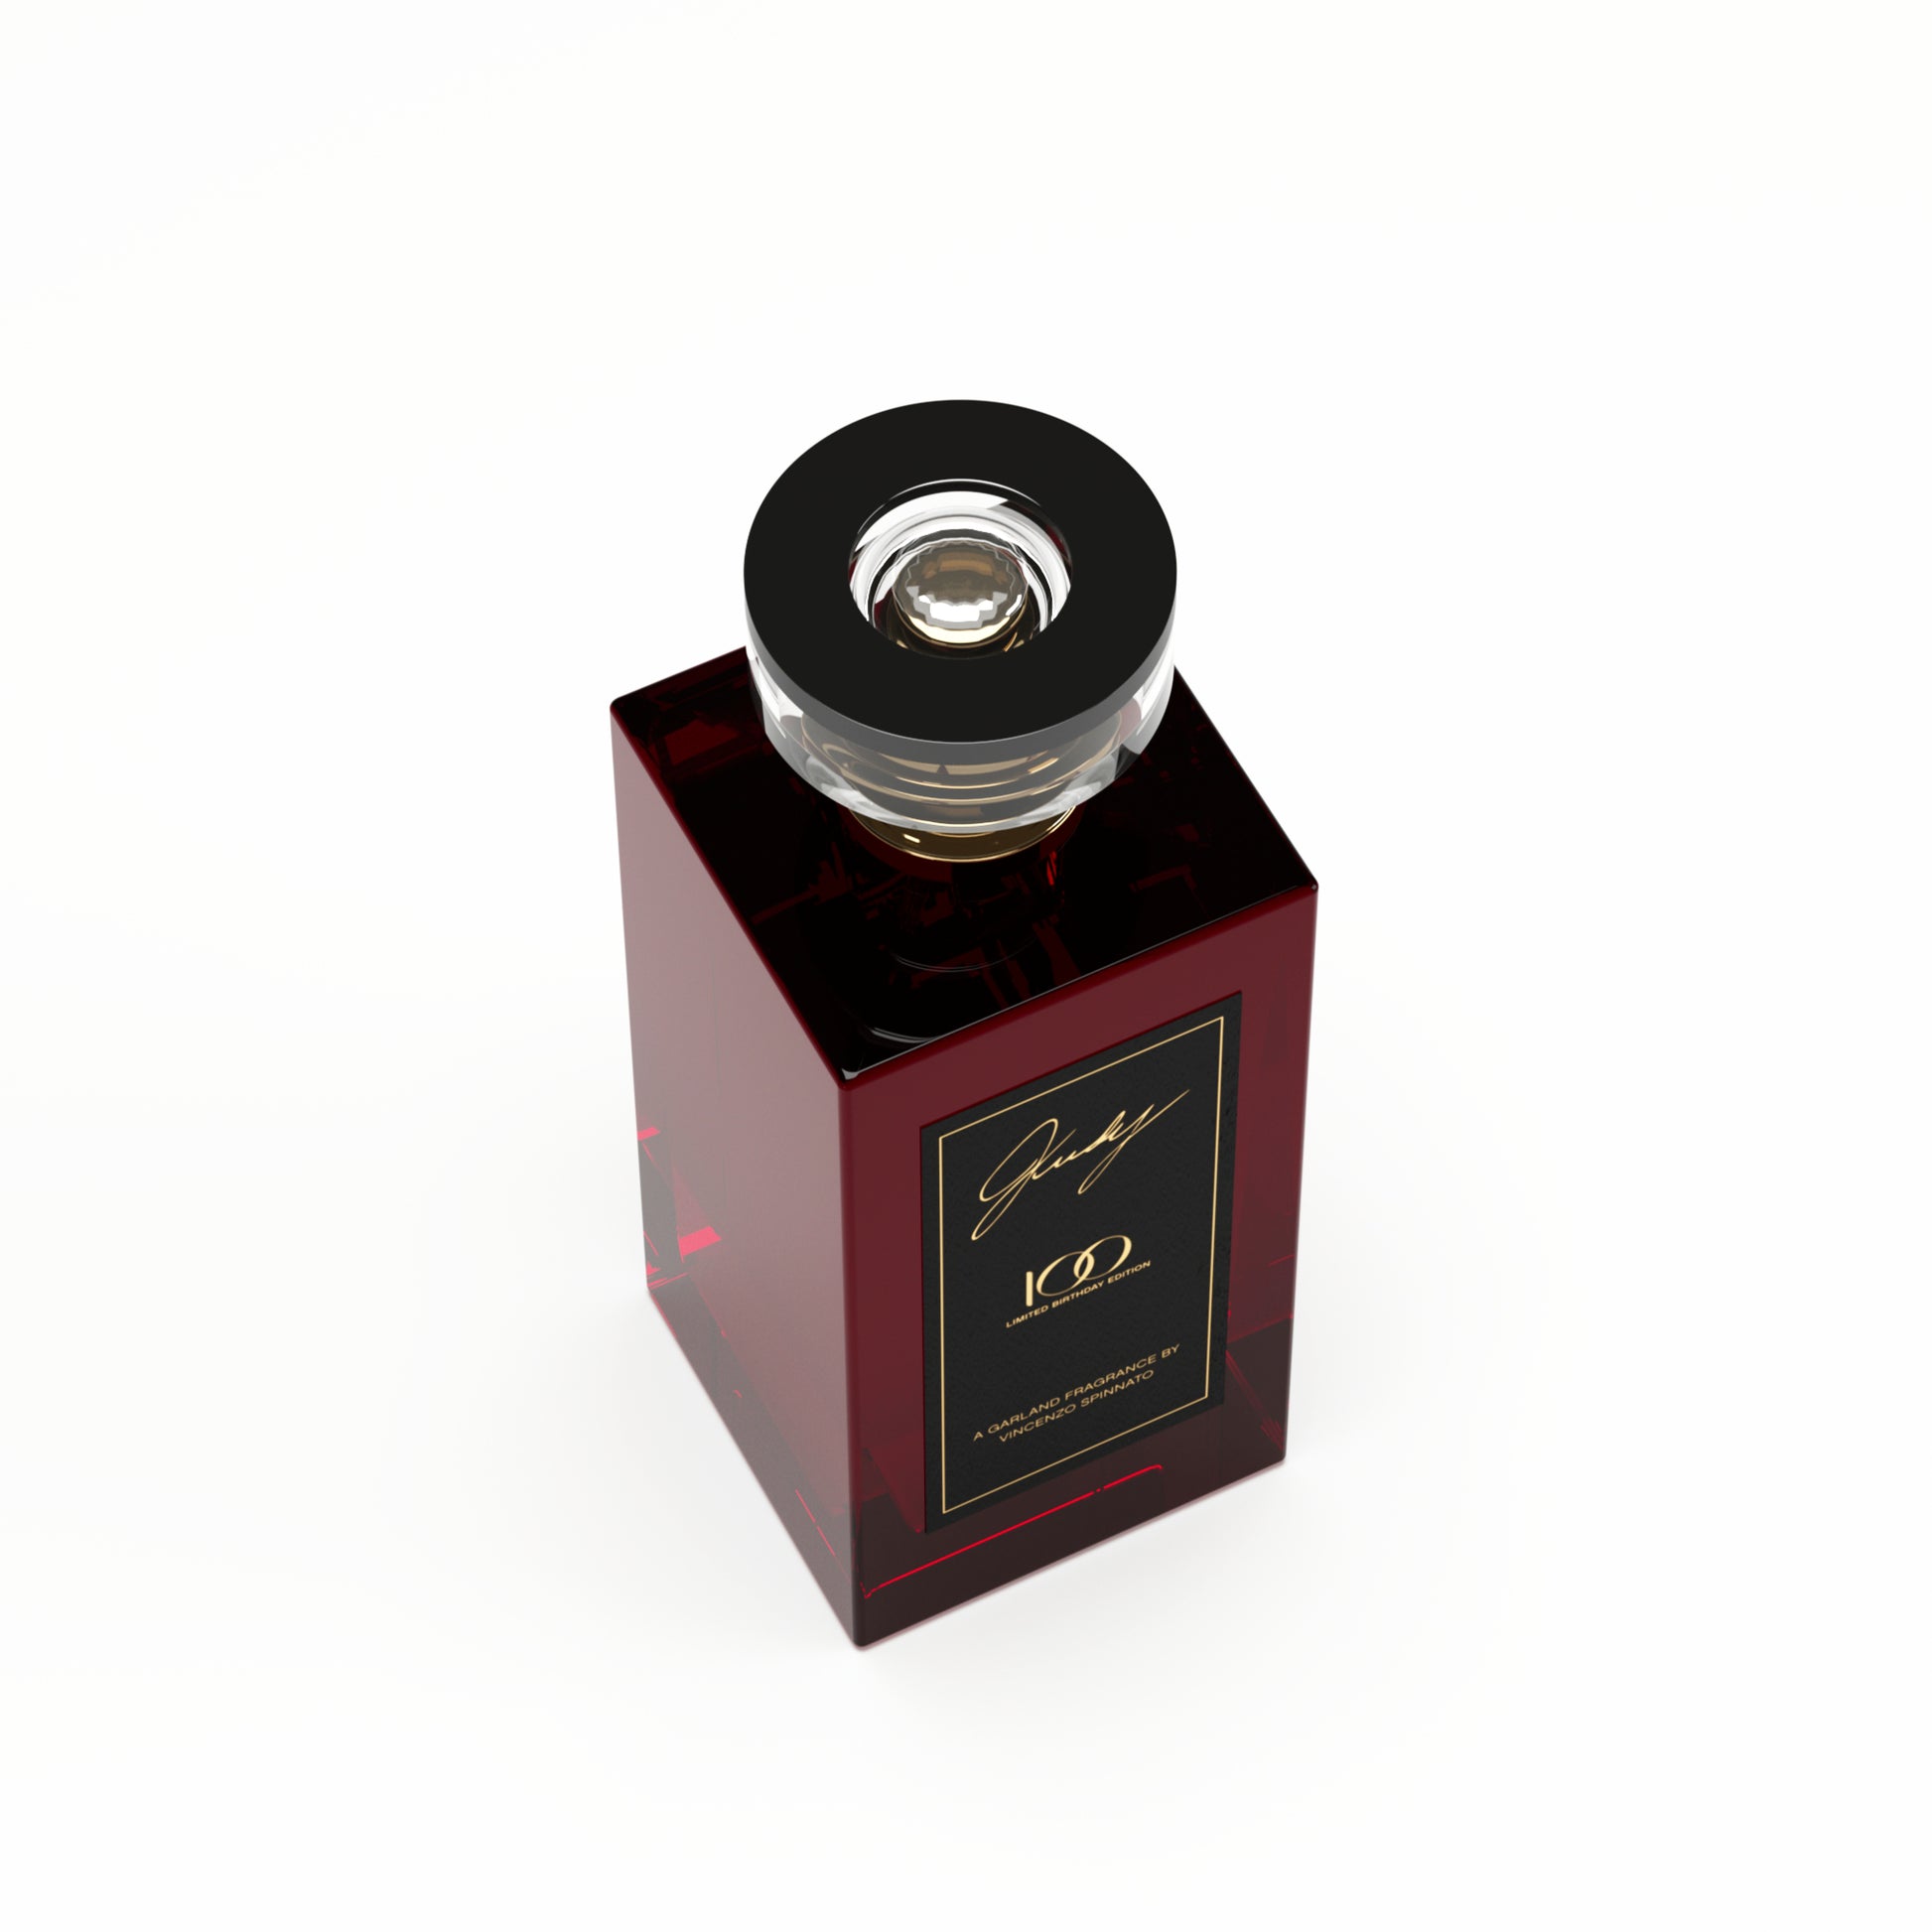 Judy - A Garland Fragrance Limited-Edition 100th Birthday Bottle